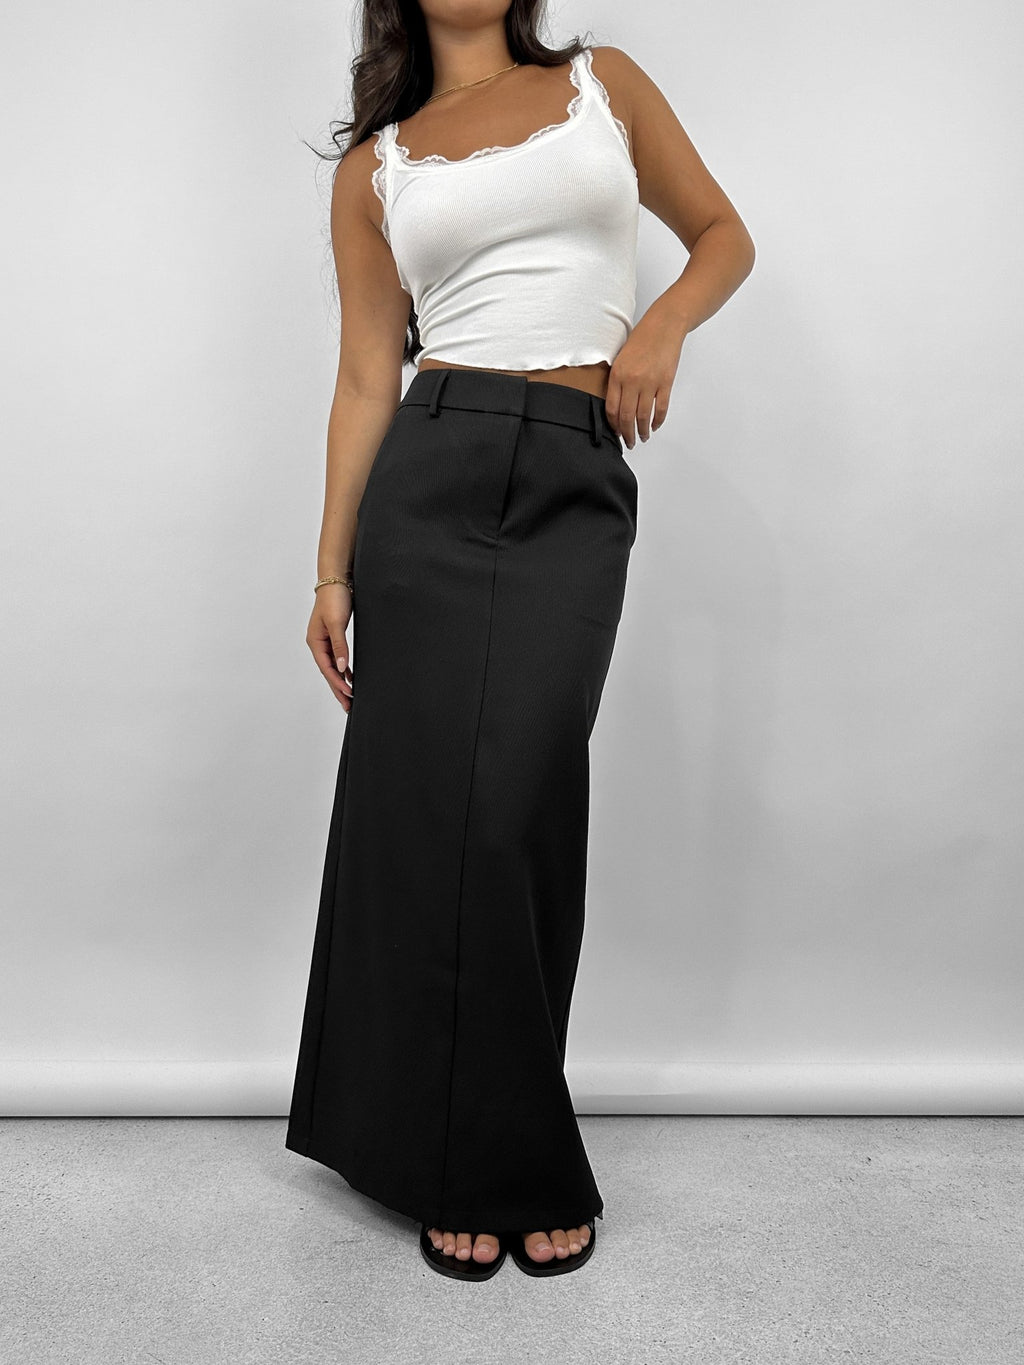 Styling a maxi length trouser skirt - Mademoiselle | Minimal Style Blog